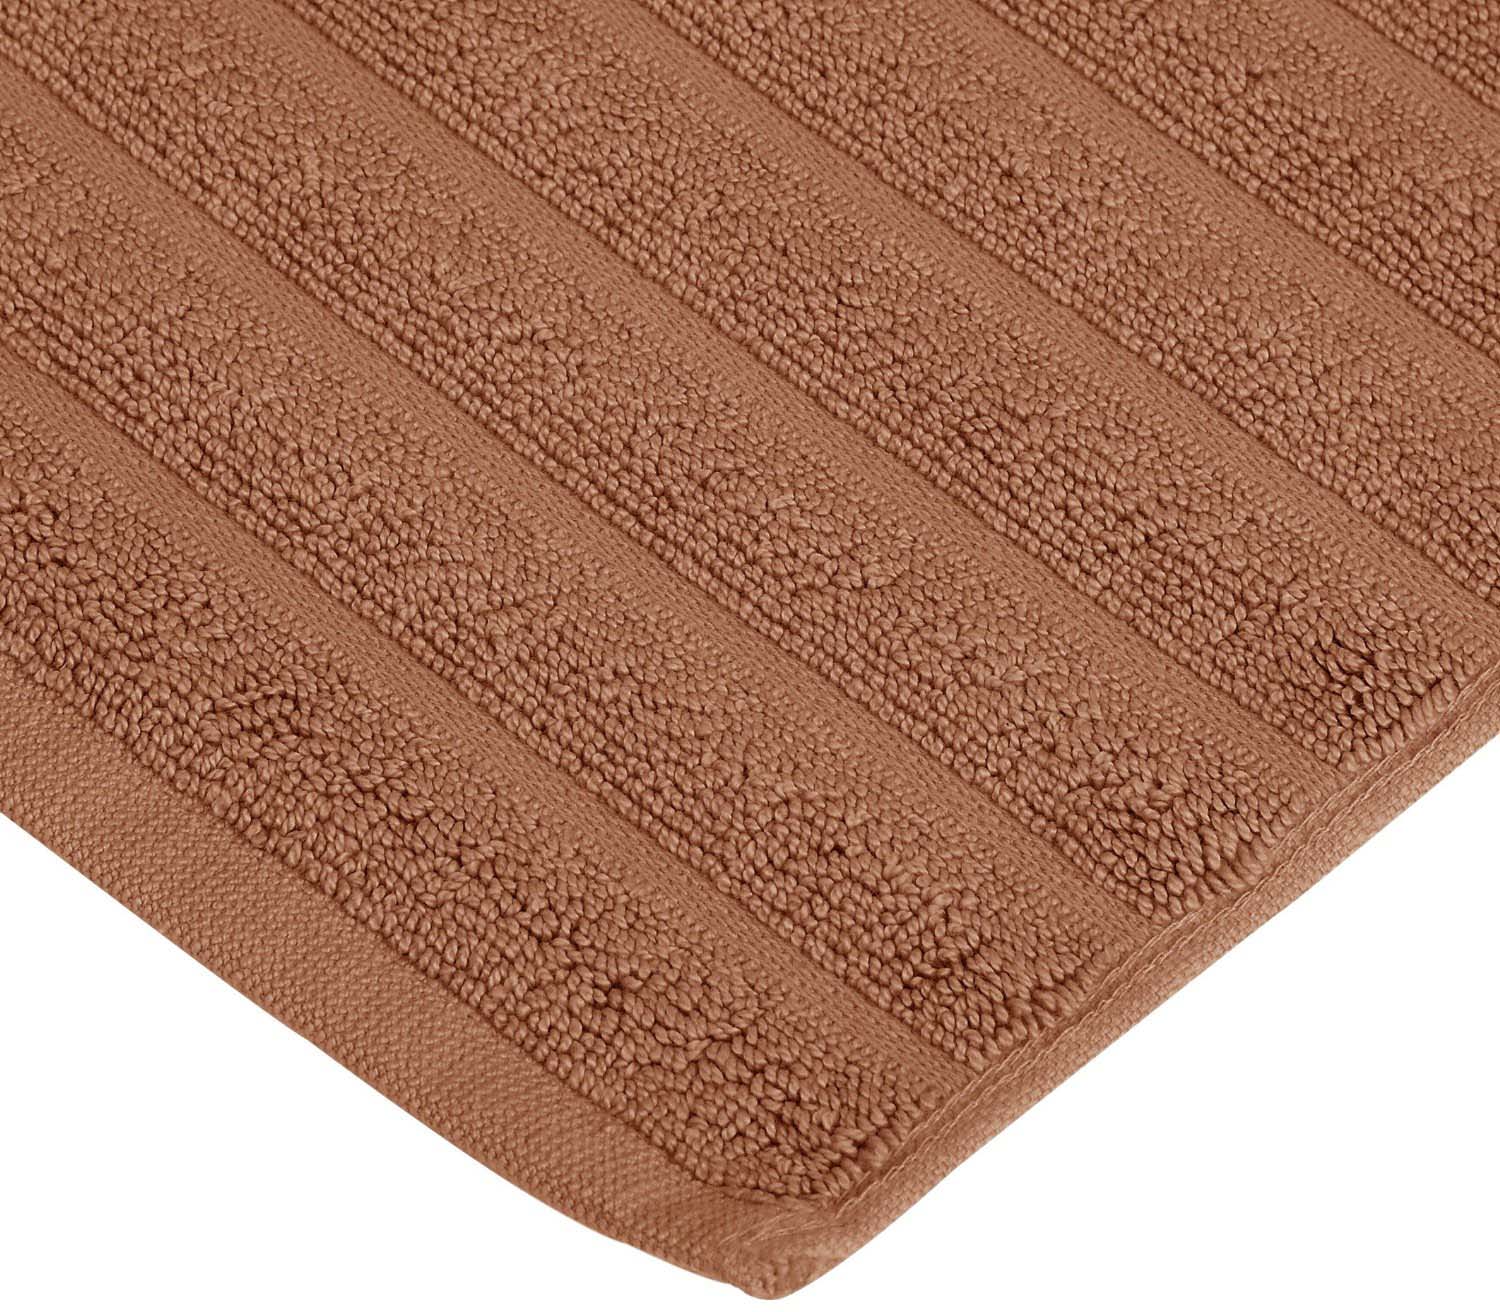 Lined 100% Cotton 1000 GSM 2-Piece Bath Mat Set - Brown